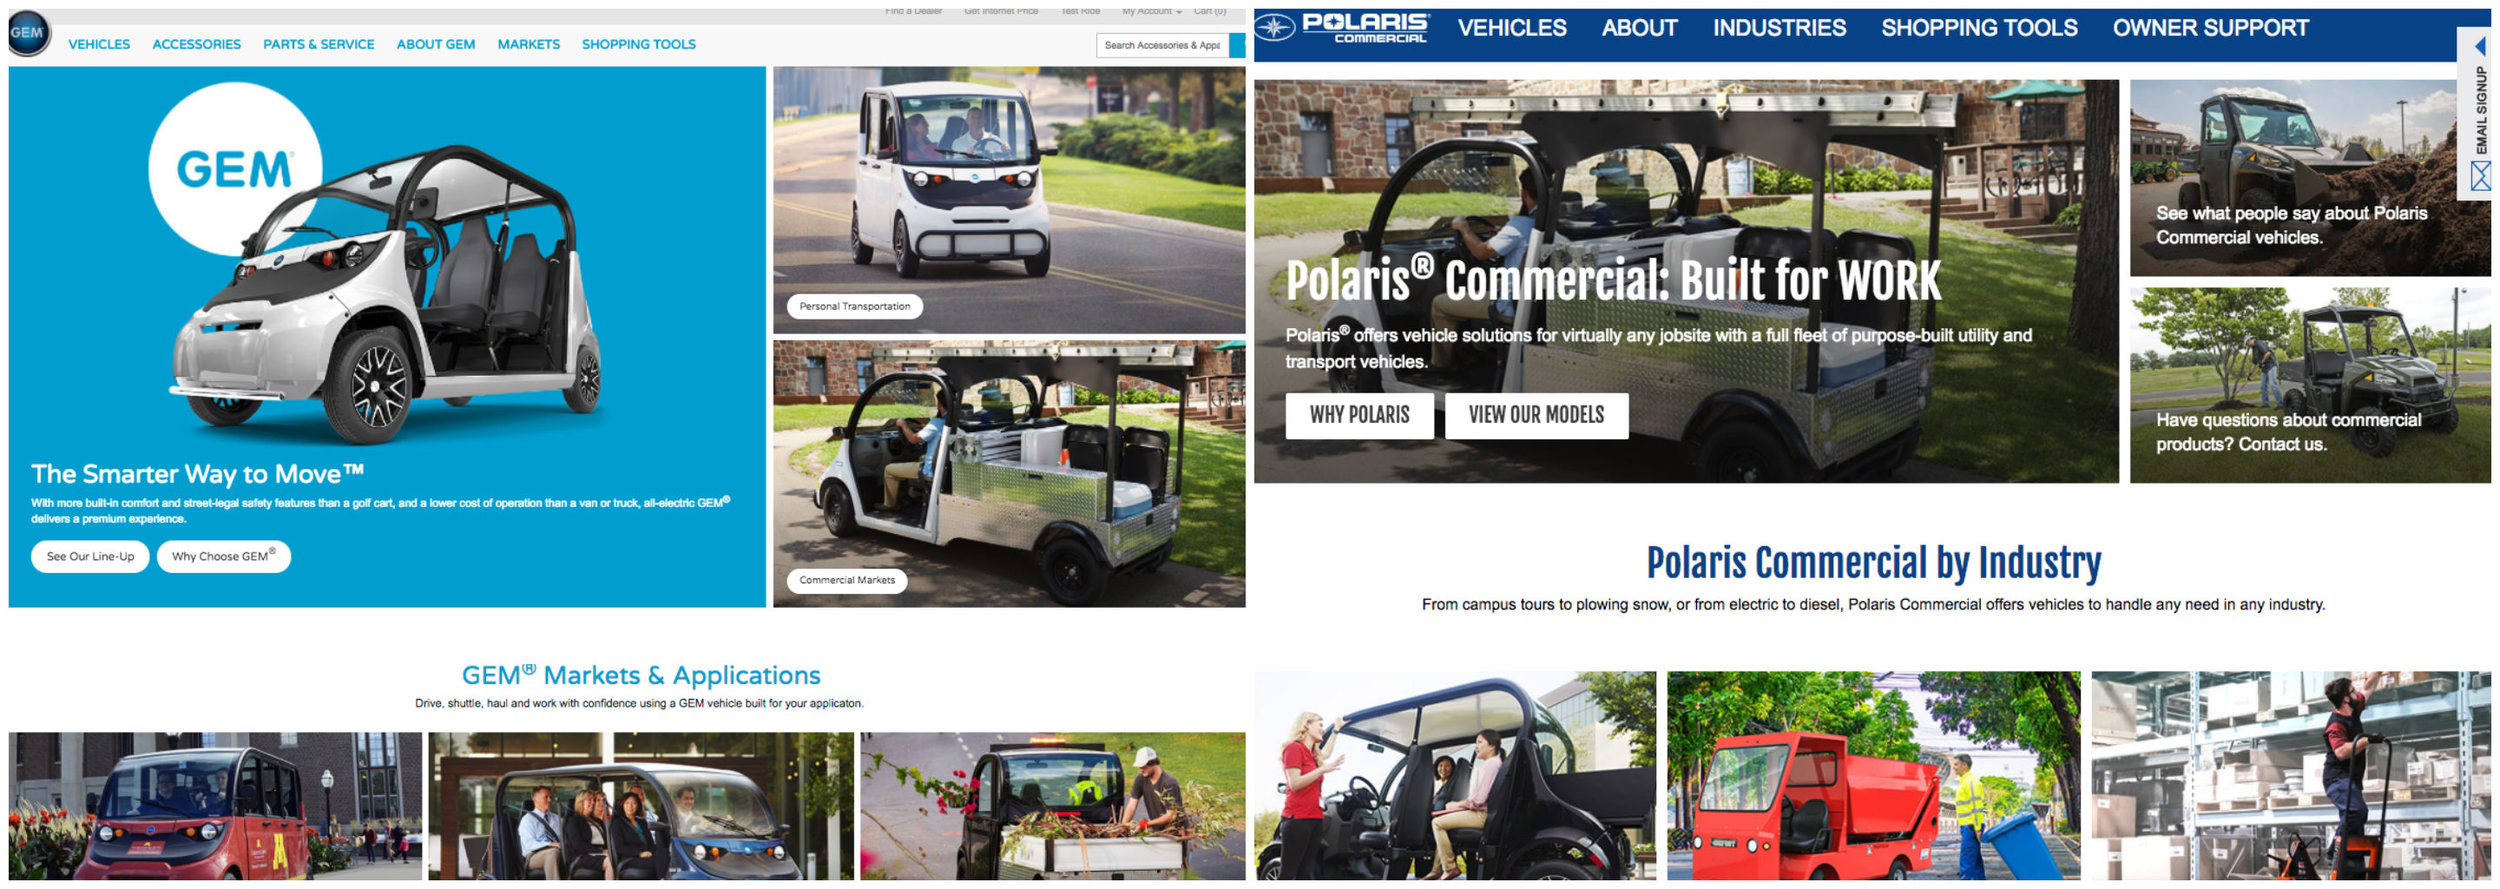 polaris-work-transportation-collage.jpg